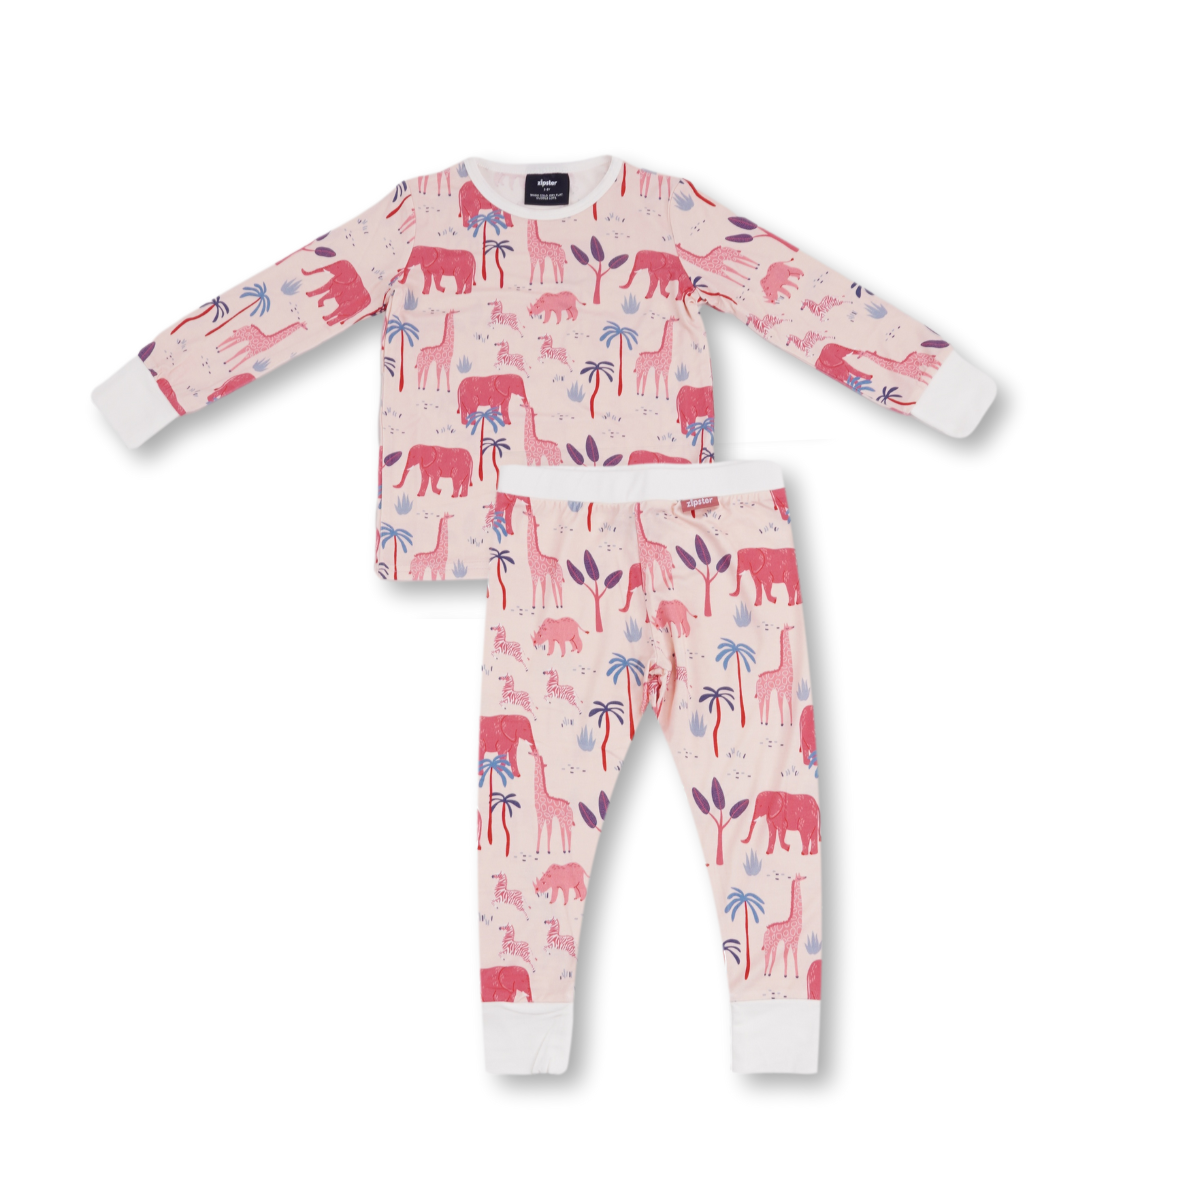 Ensemble de pyjamas pour enfants Safari rose